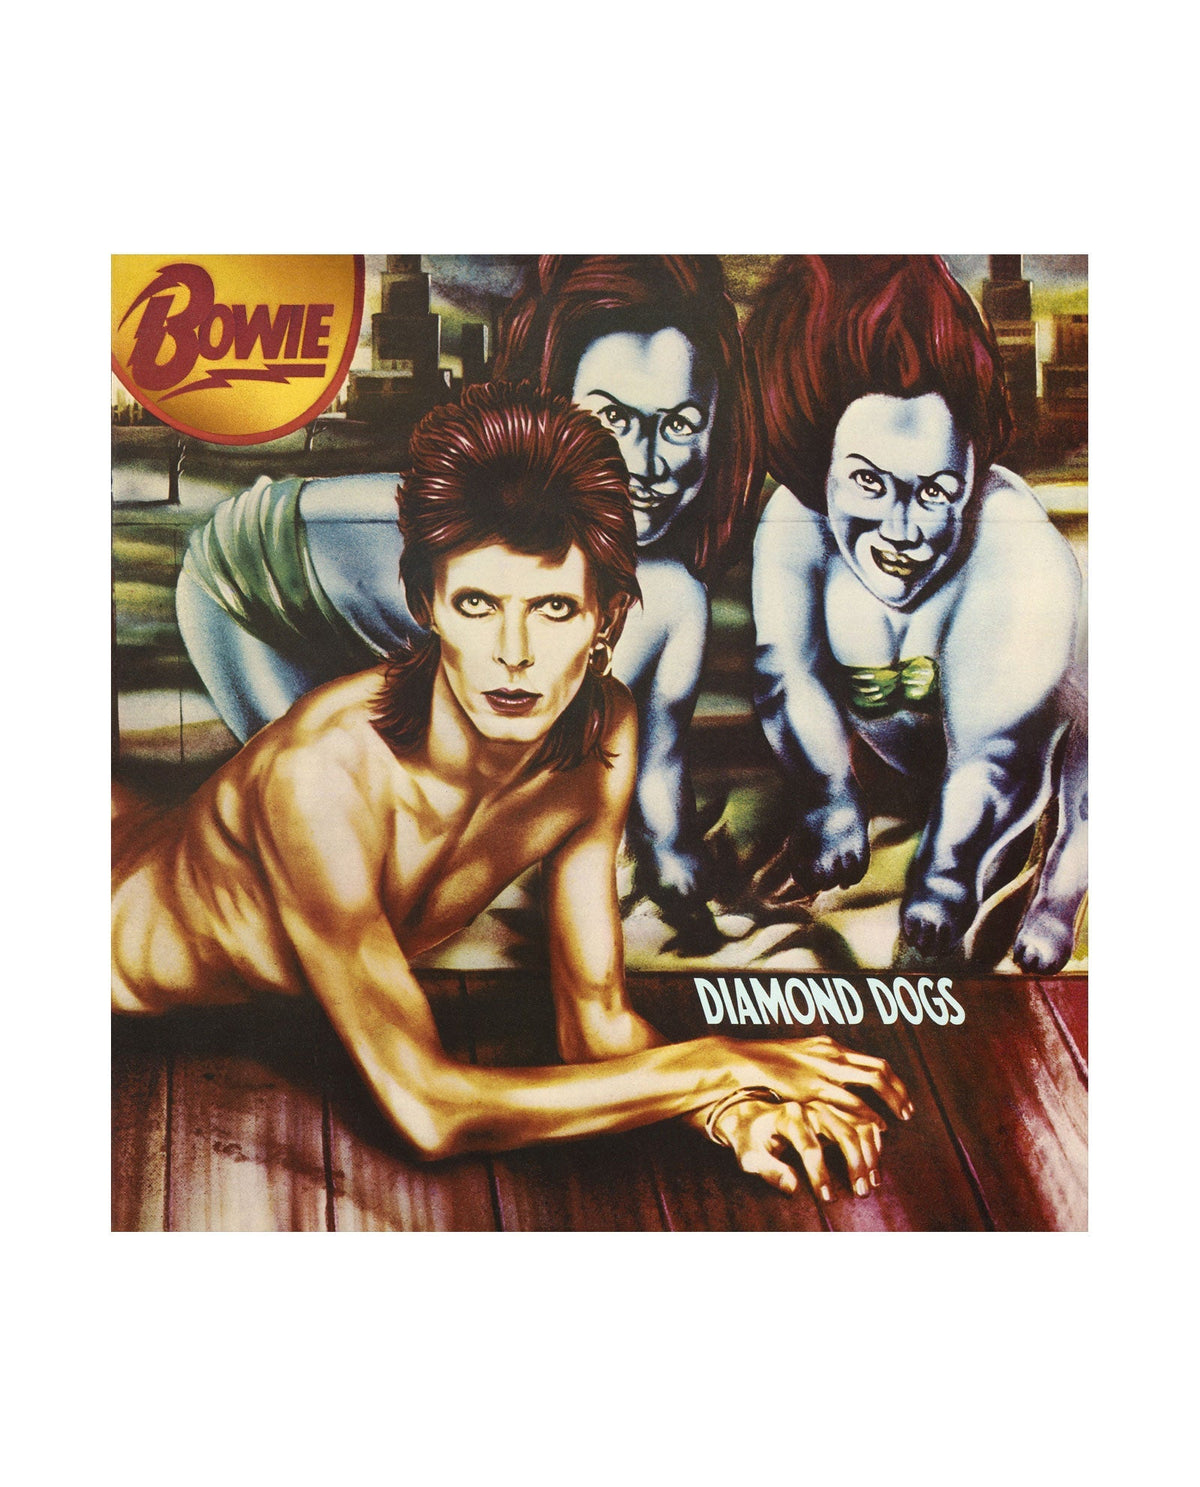 David Bowie - LP Vinilo "Diamond Dogs (Ed. 50 aniversario)" - D2fy · Rocktud - Rocktud